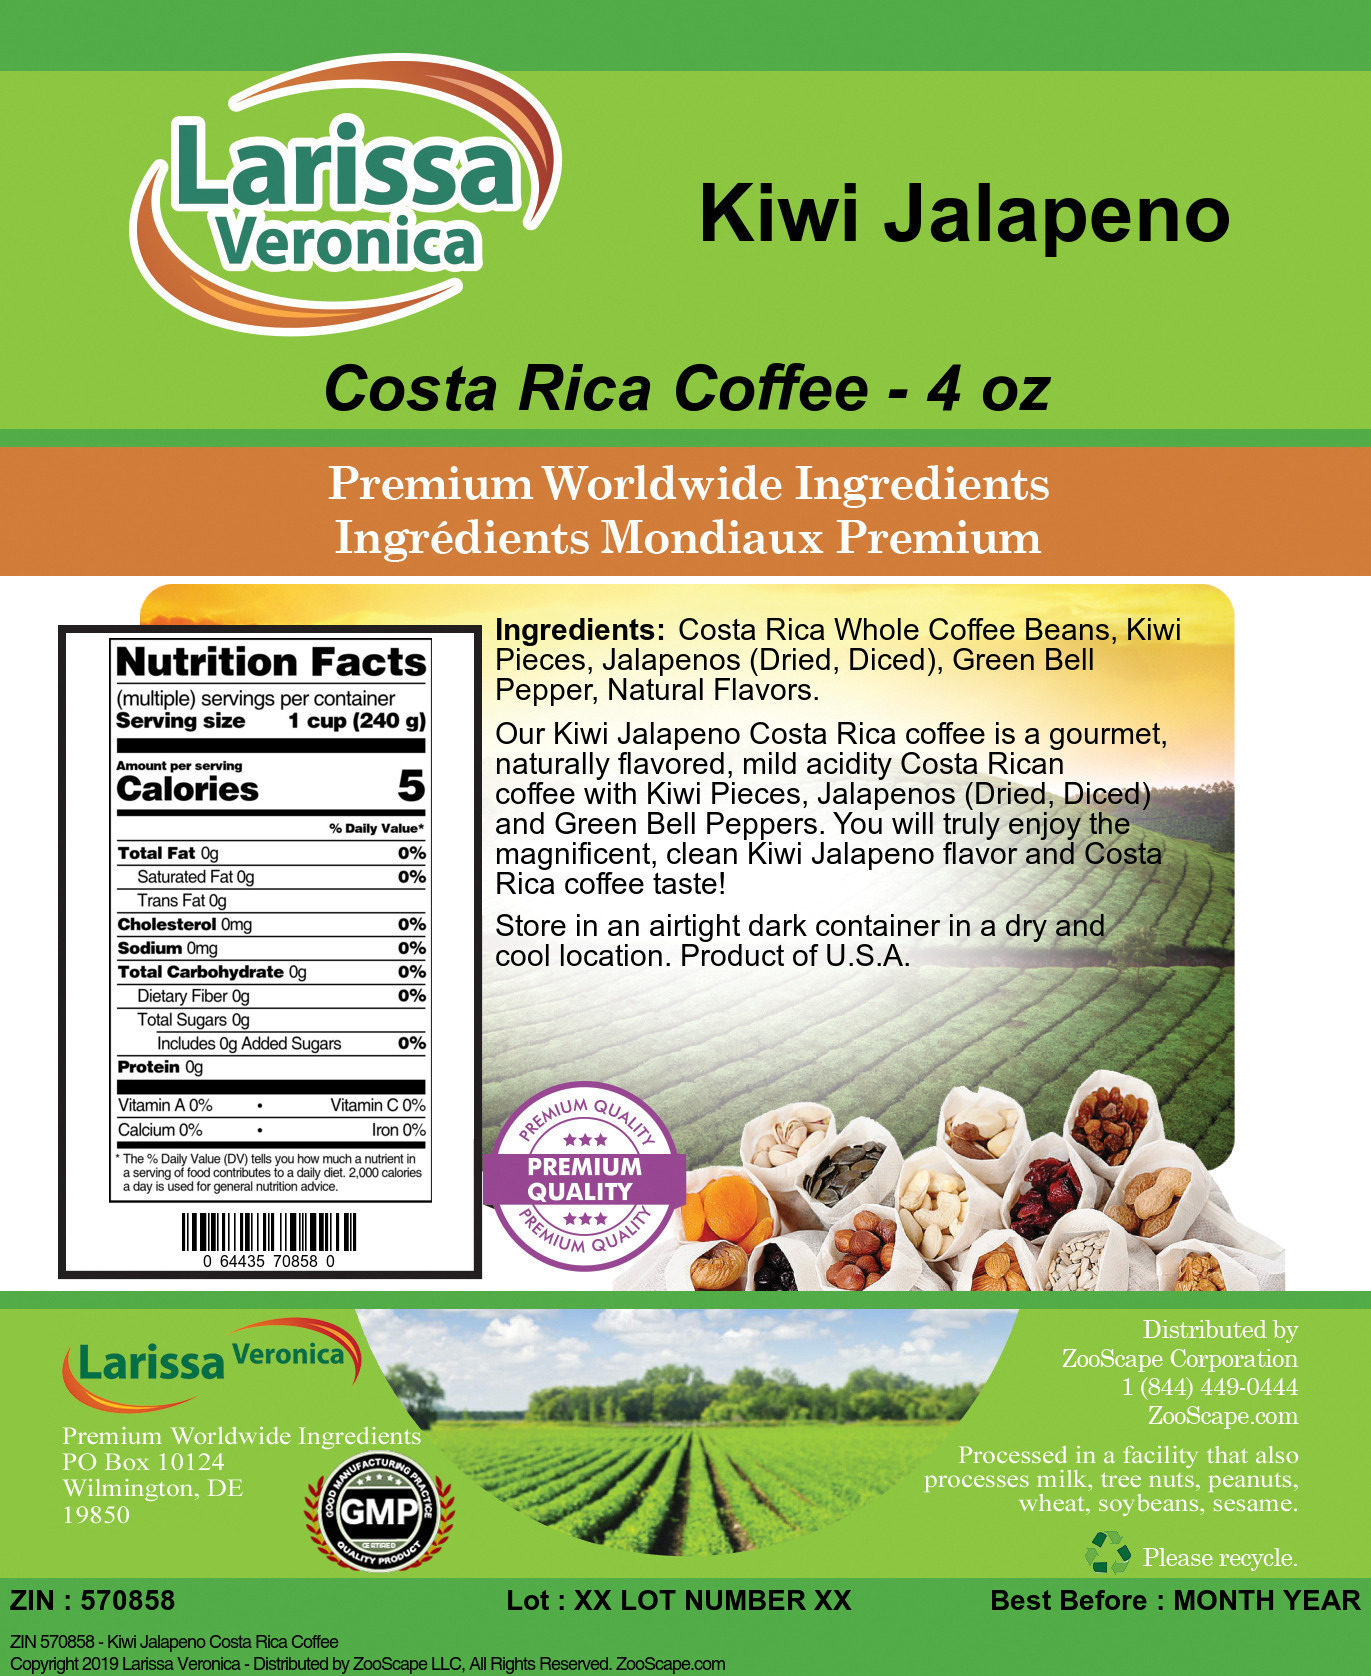 Kiwi Jalapeno Costa Rica Coffee - Label